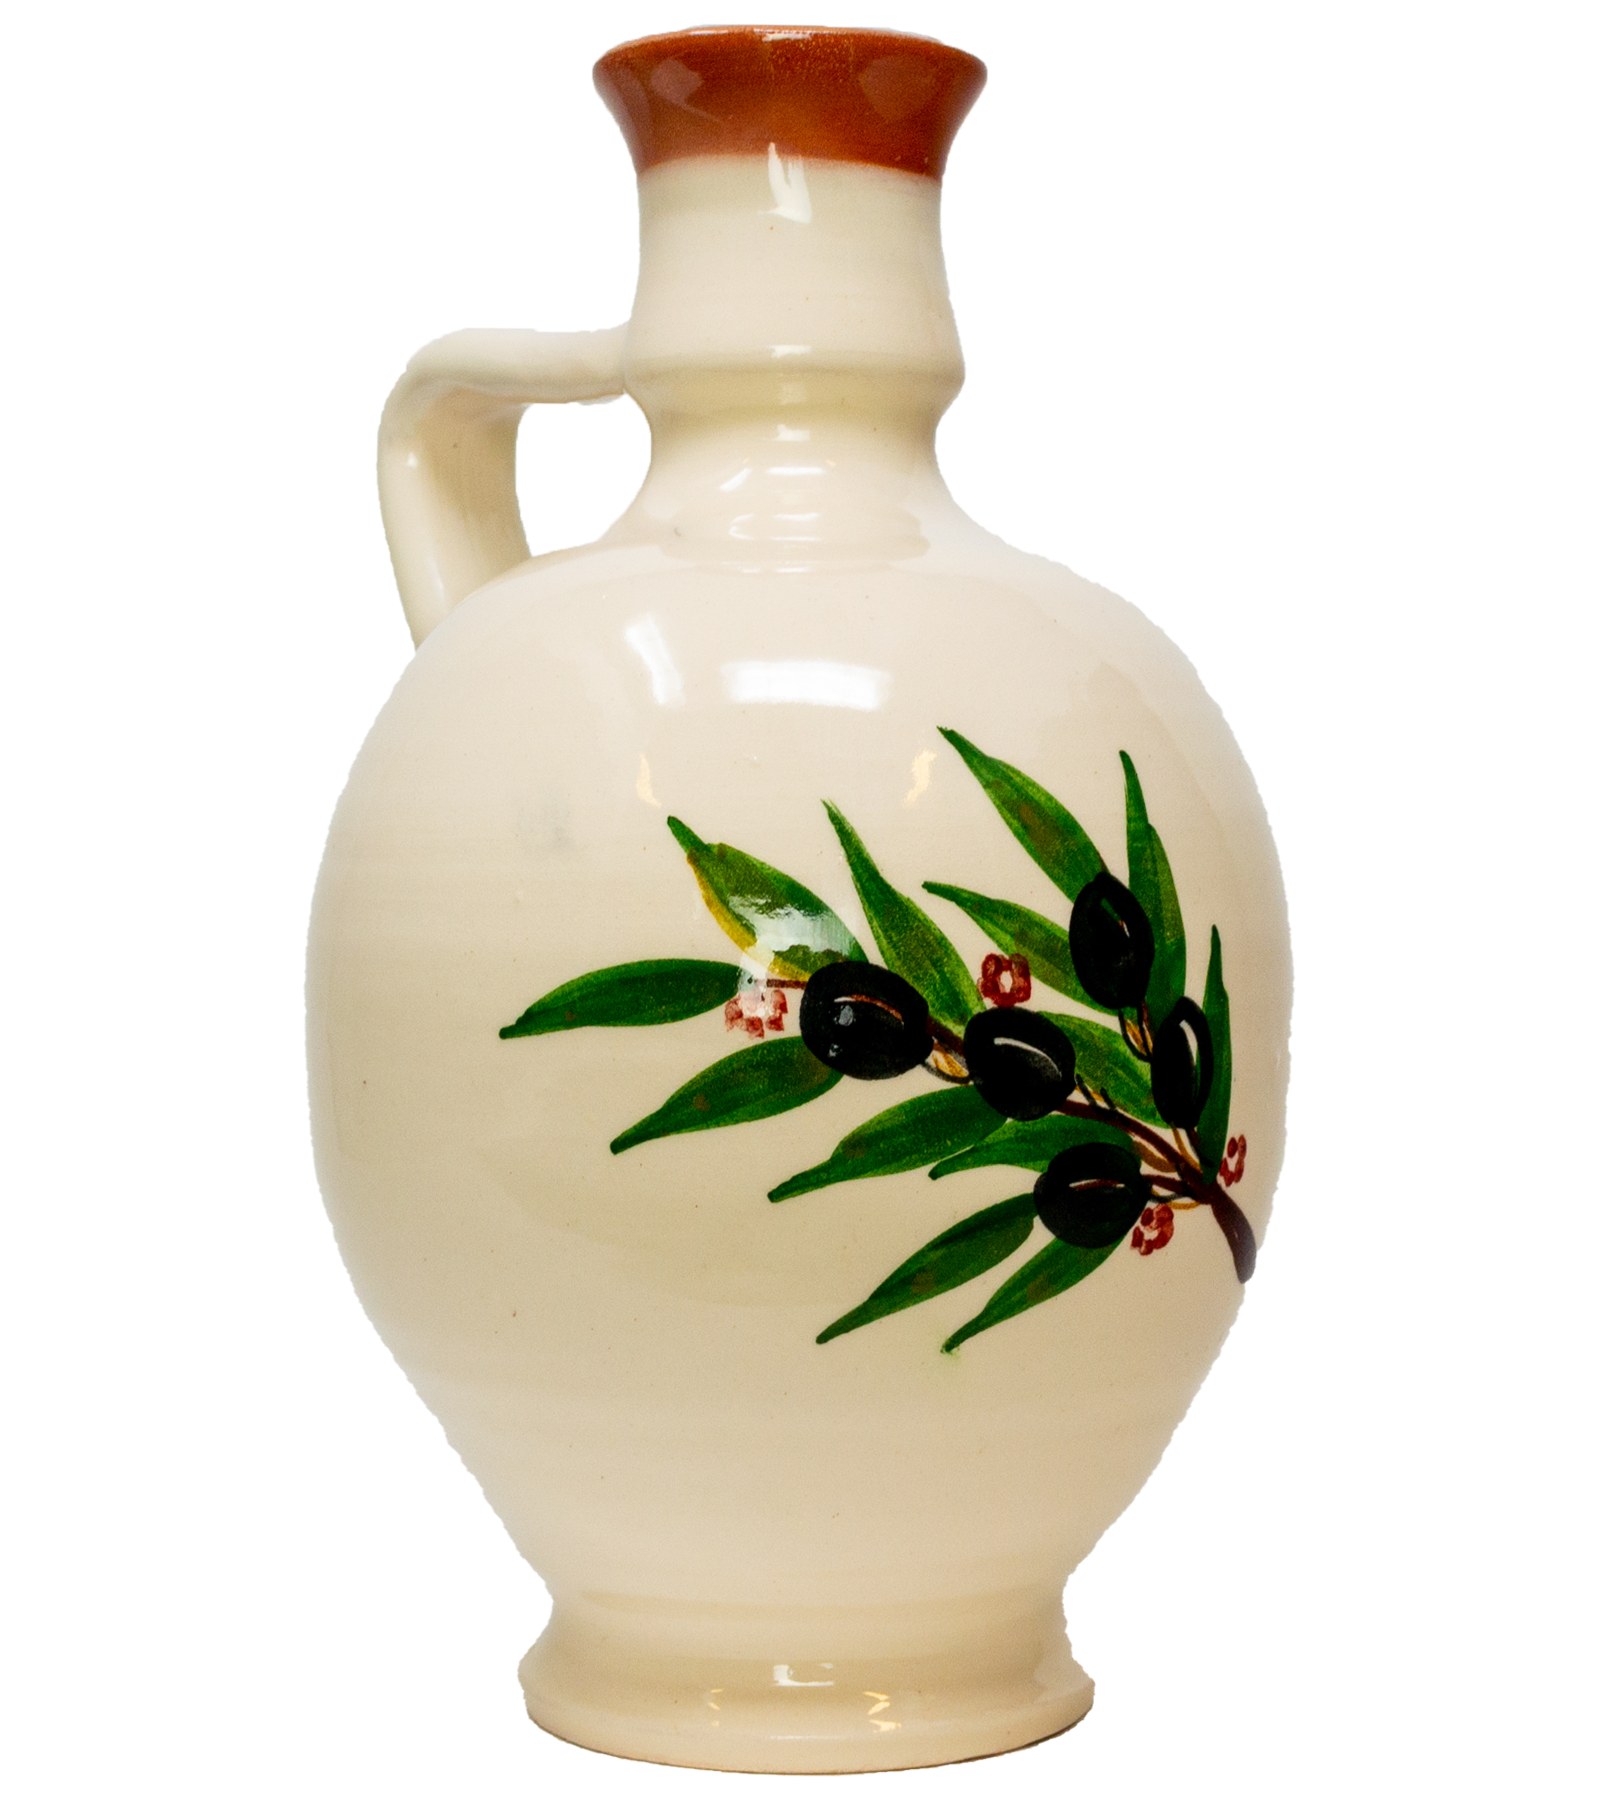 Elias' ceramic olive oil pot that is filled with Spyros' olive oil